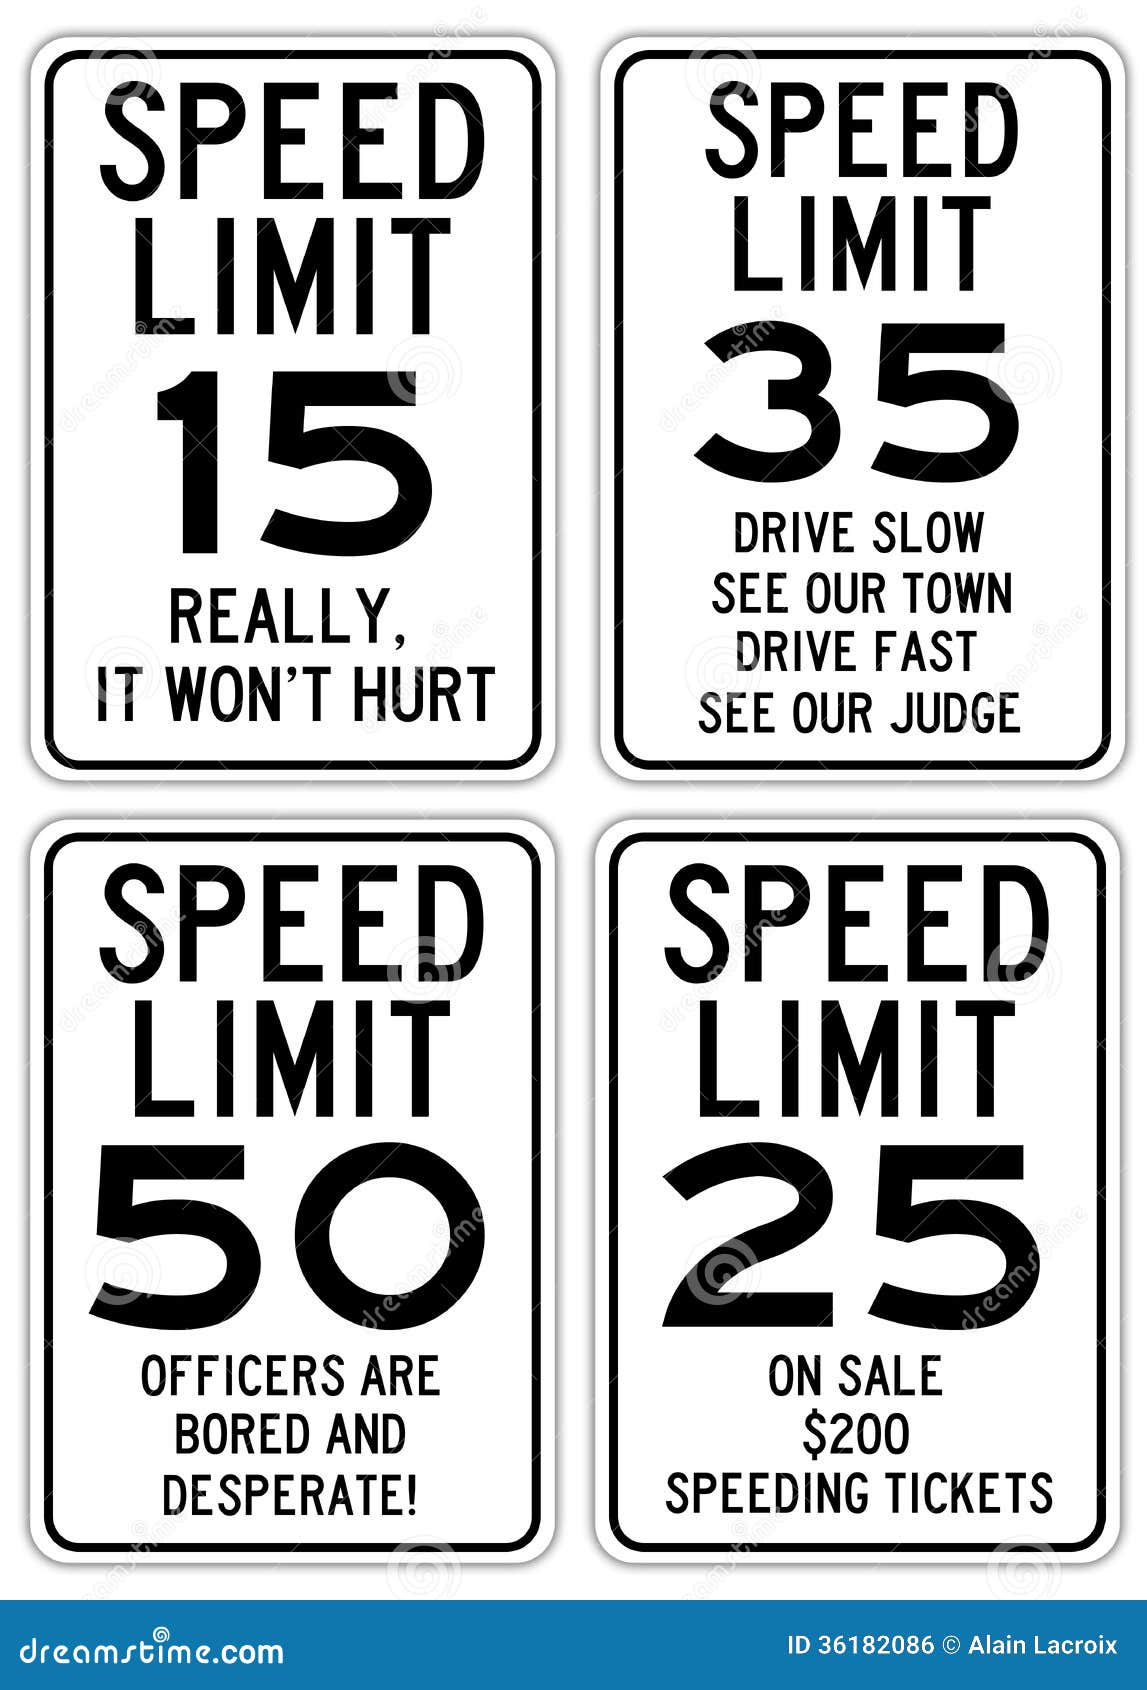 funny-sign-road-signs-regarding-speed-limits-36182086.jpg